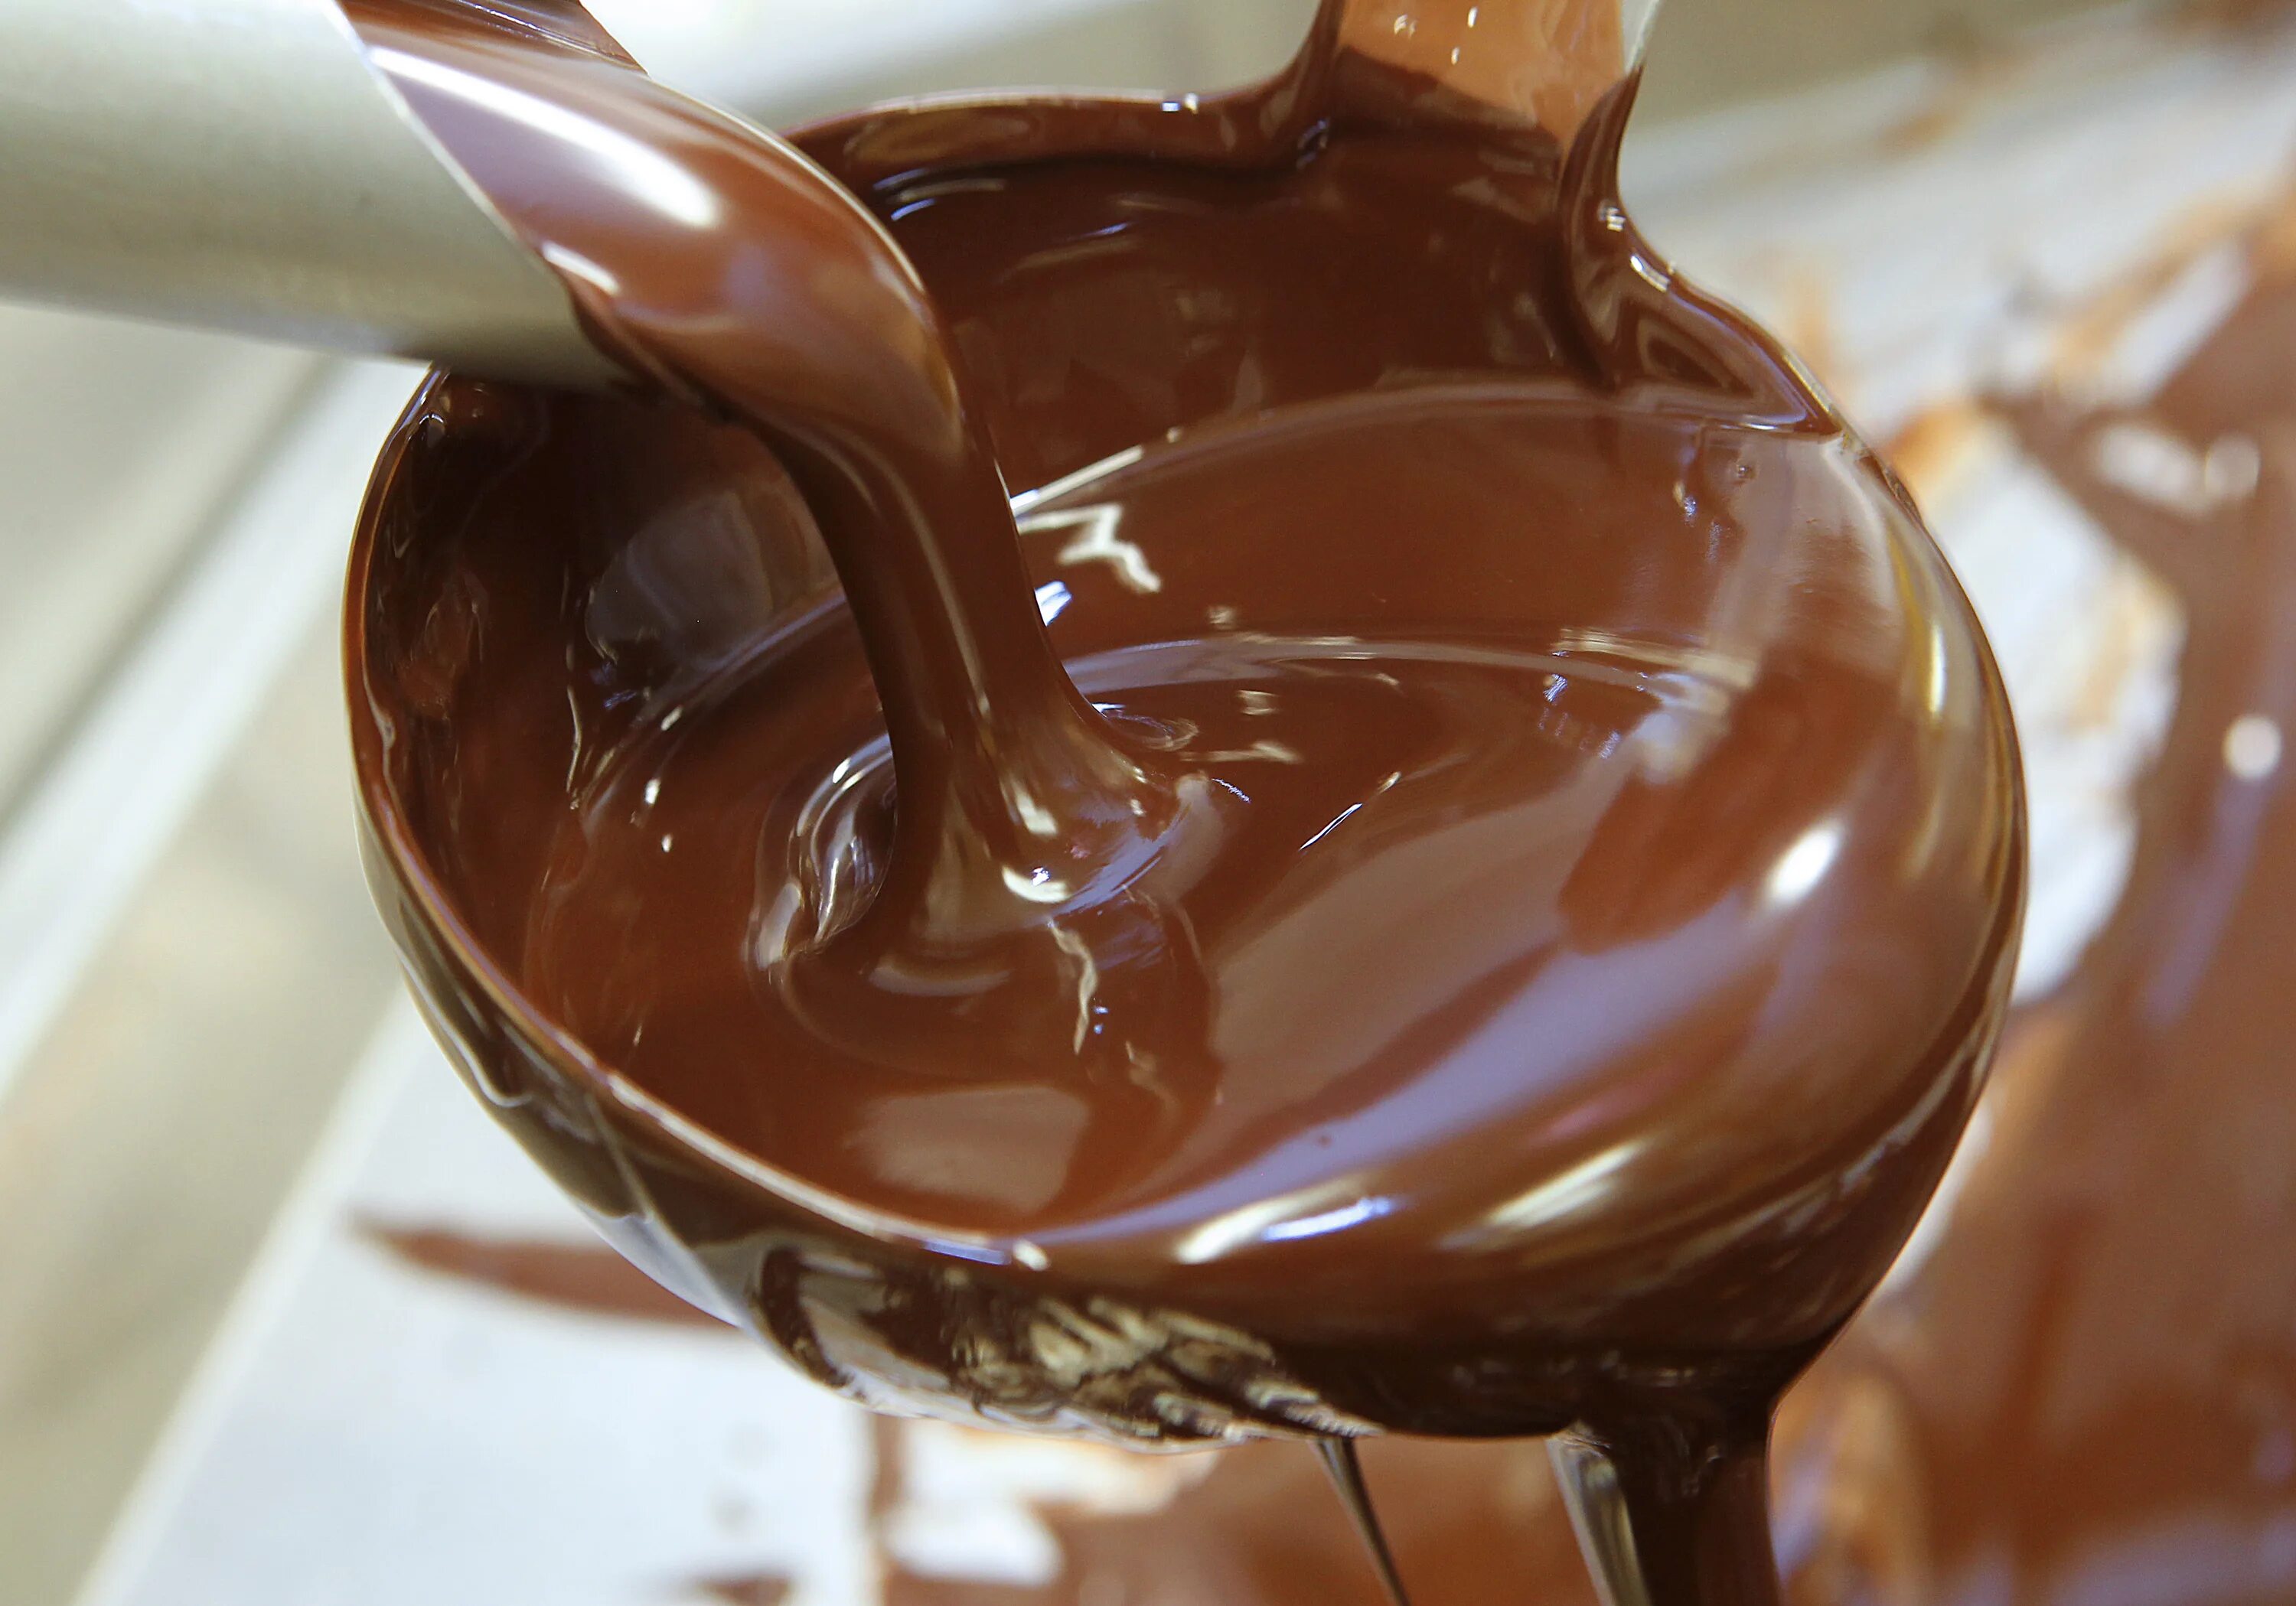 Жидкий шоколад. Растопленный шоколад. Расплавленный шоколад. Приготовление шоколада.